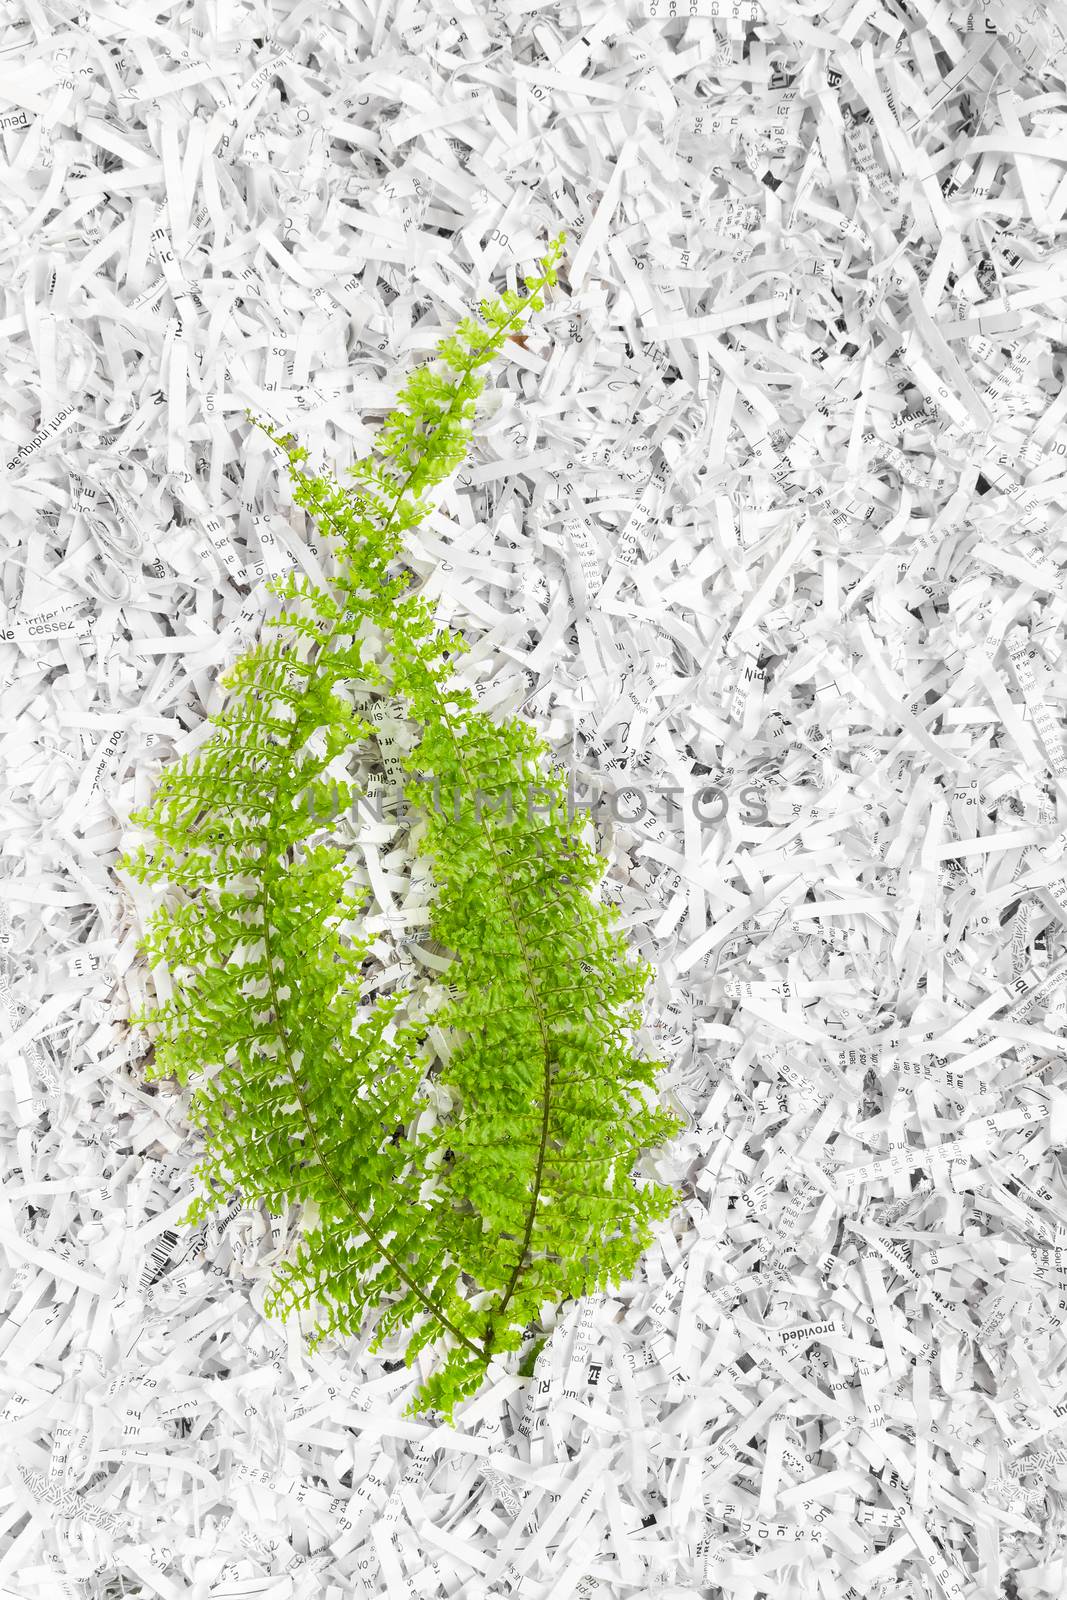 Green plant on shredded paper background by anikasalsera